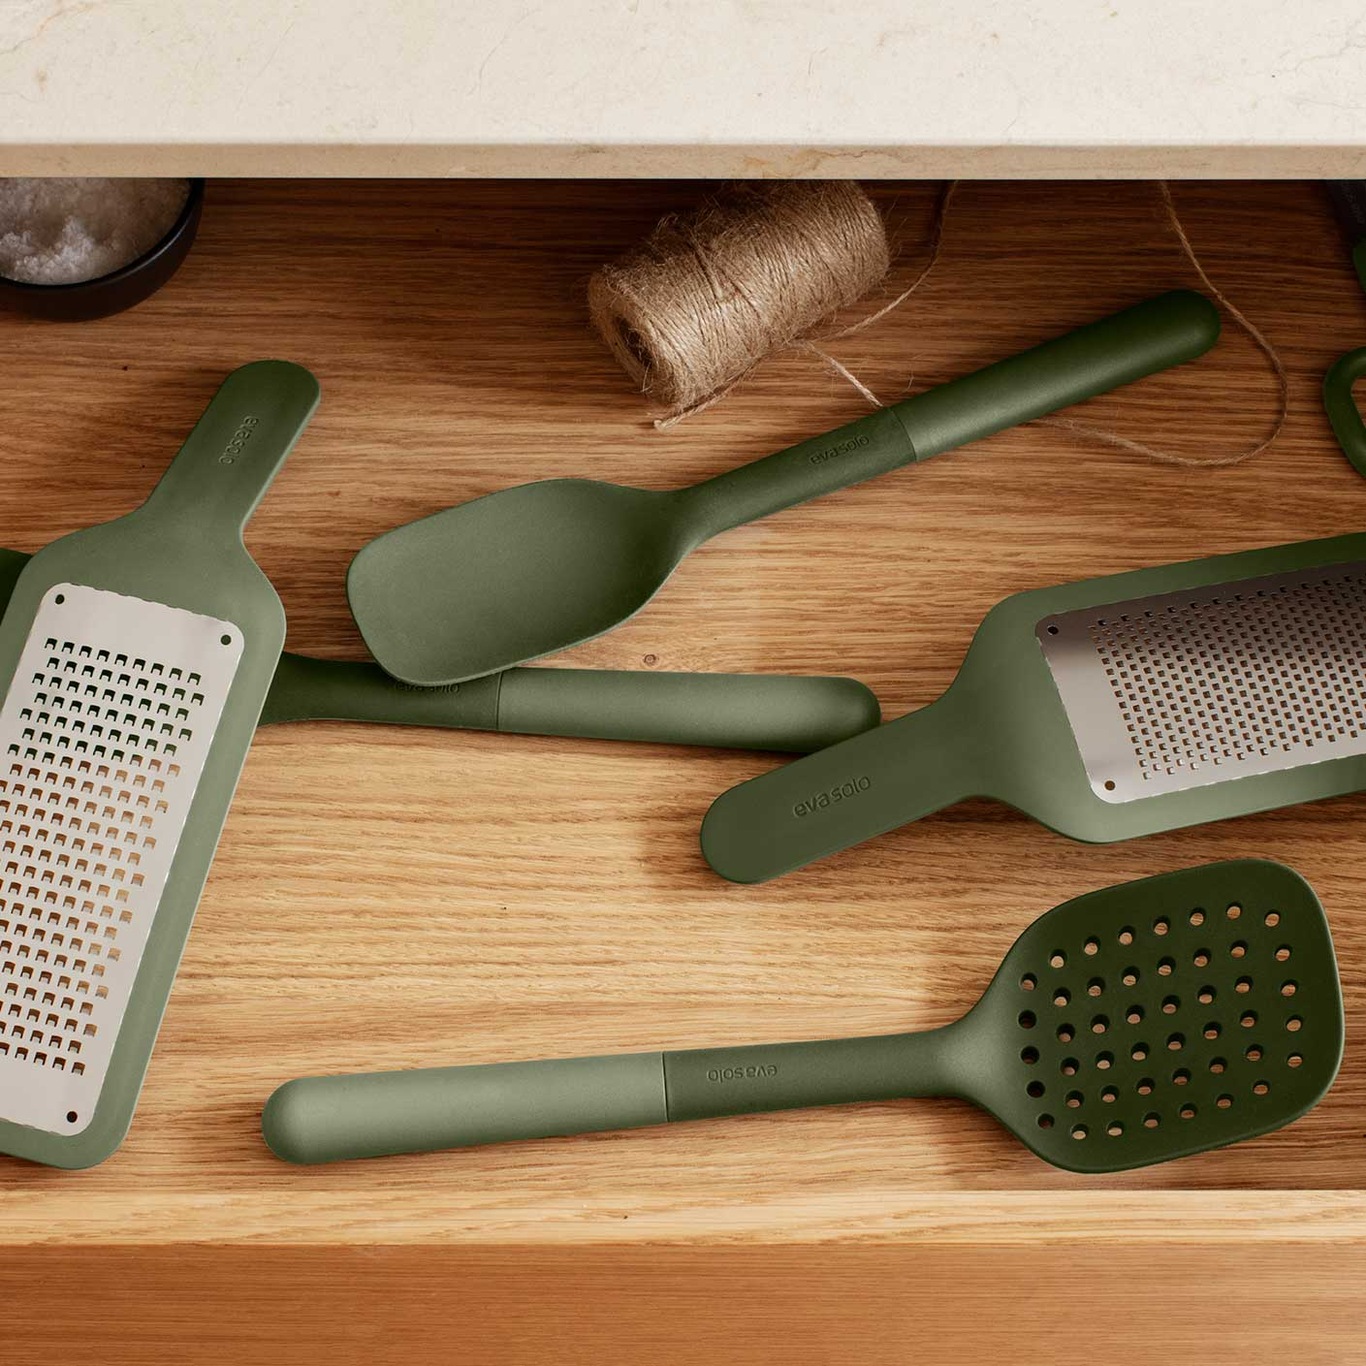 https://royaldesign.com/image/2/eva-solo-green-tools-slotted-spoon-0?w=800&quality=80